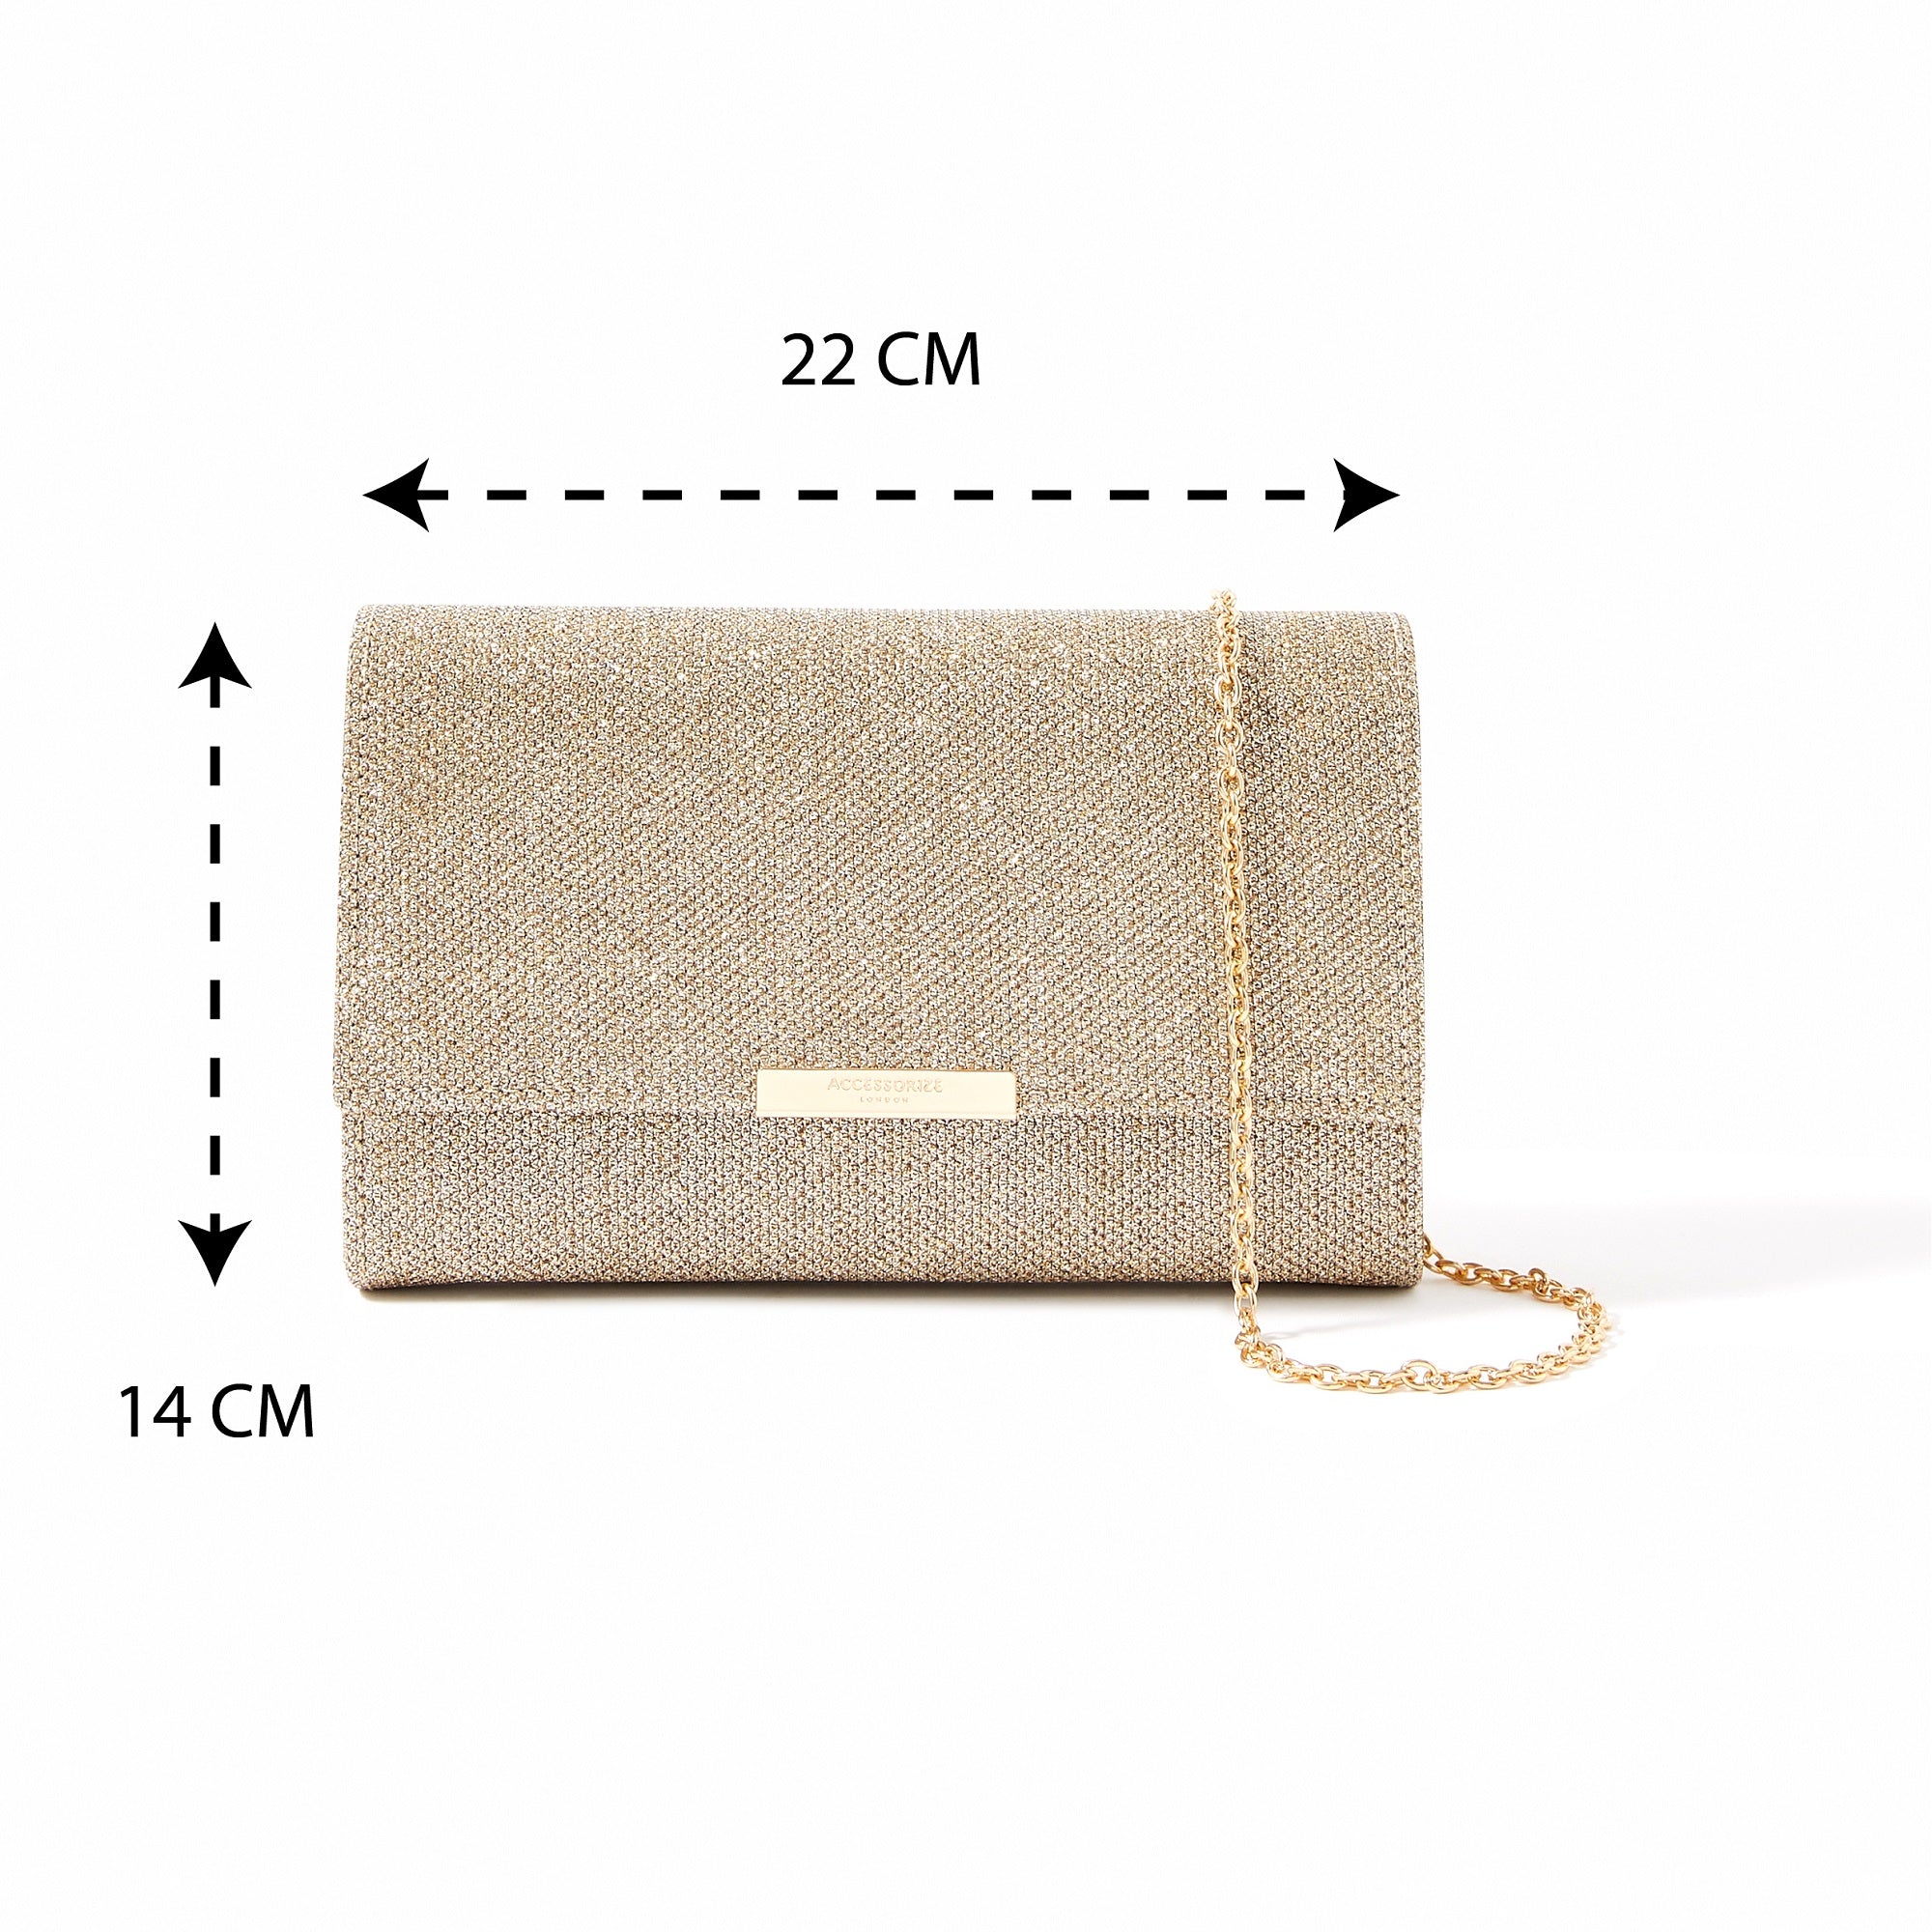 Accessorize London Women's Faux Leather Gold Lurex Box Clutch Party bag